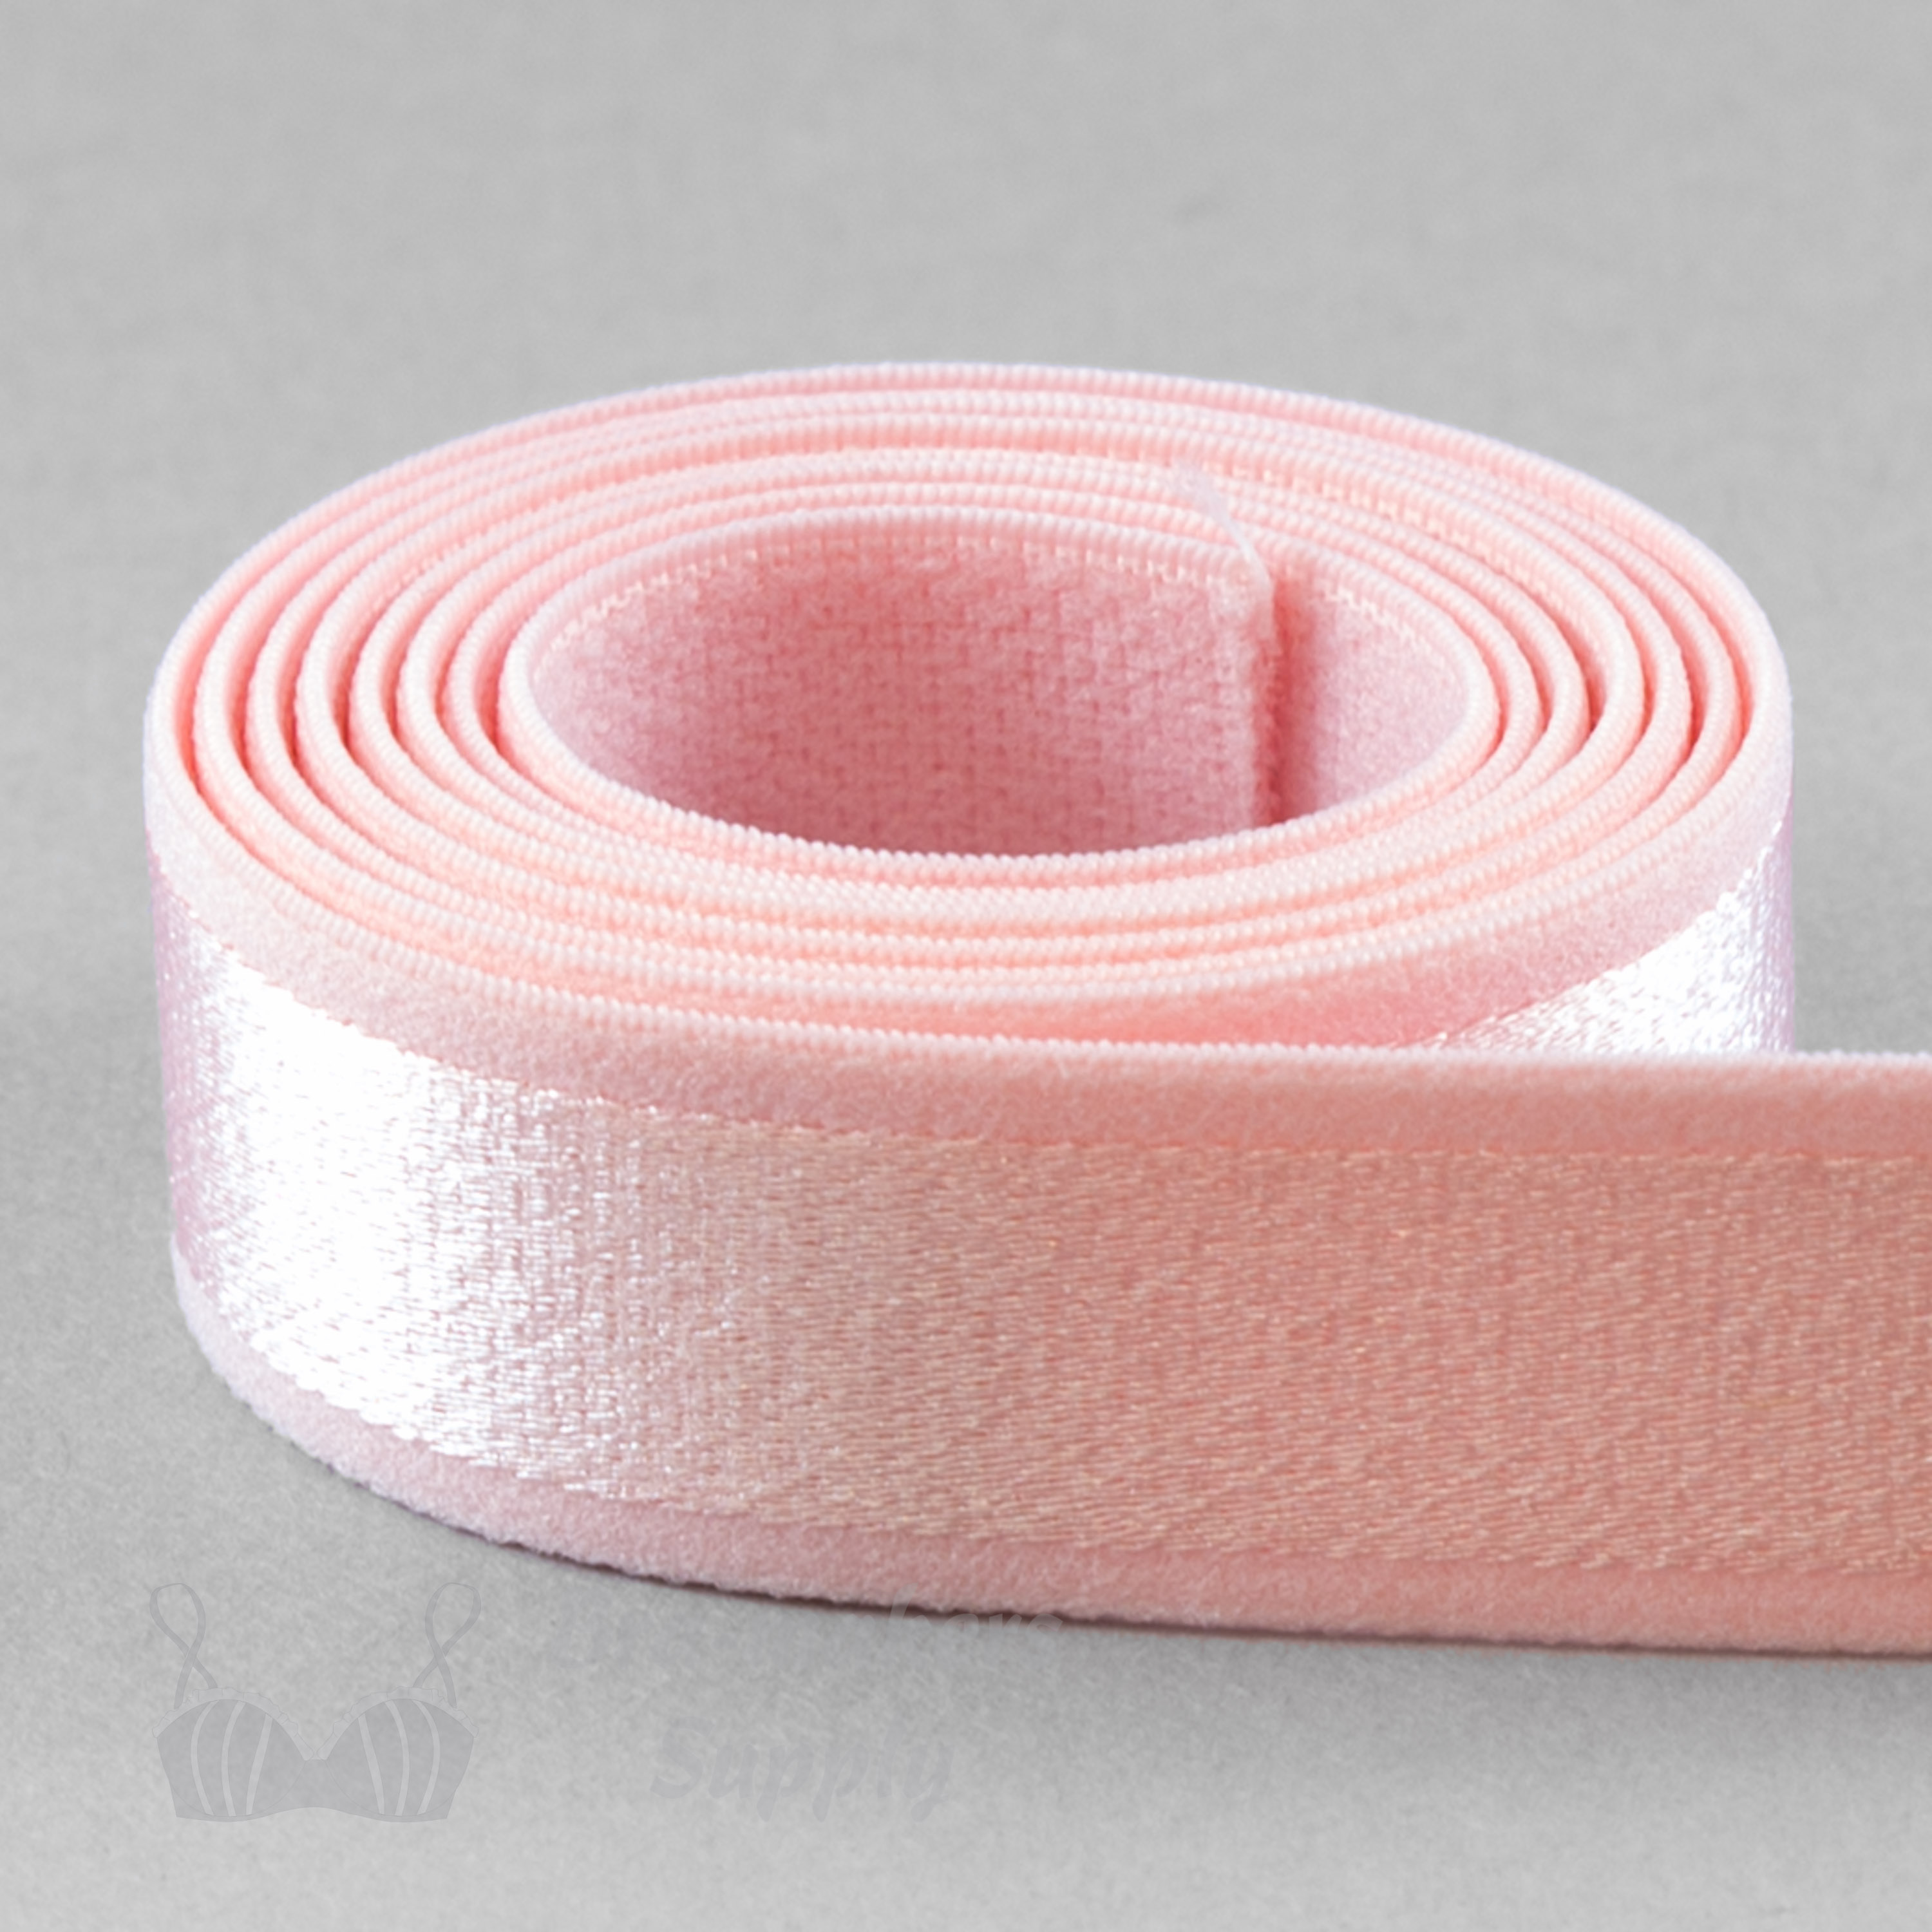 https://www.braandcorsetsupplies.com/wp-content/uploads/2016/07/three-quarters-of-an-inch-satin-stripe-strap-elastic-or-18-mm-bra-strap-elastic-ES-64-pink-from-Bra-Makers-Supply-1-metre-roll-shown.jpg